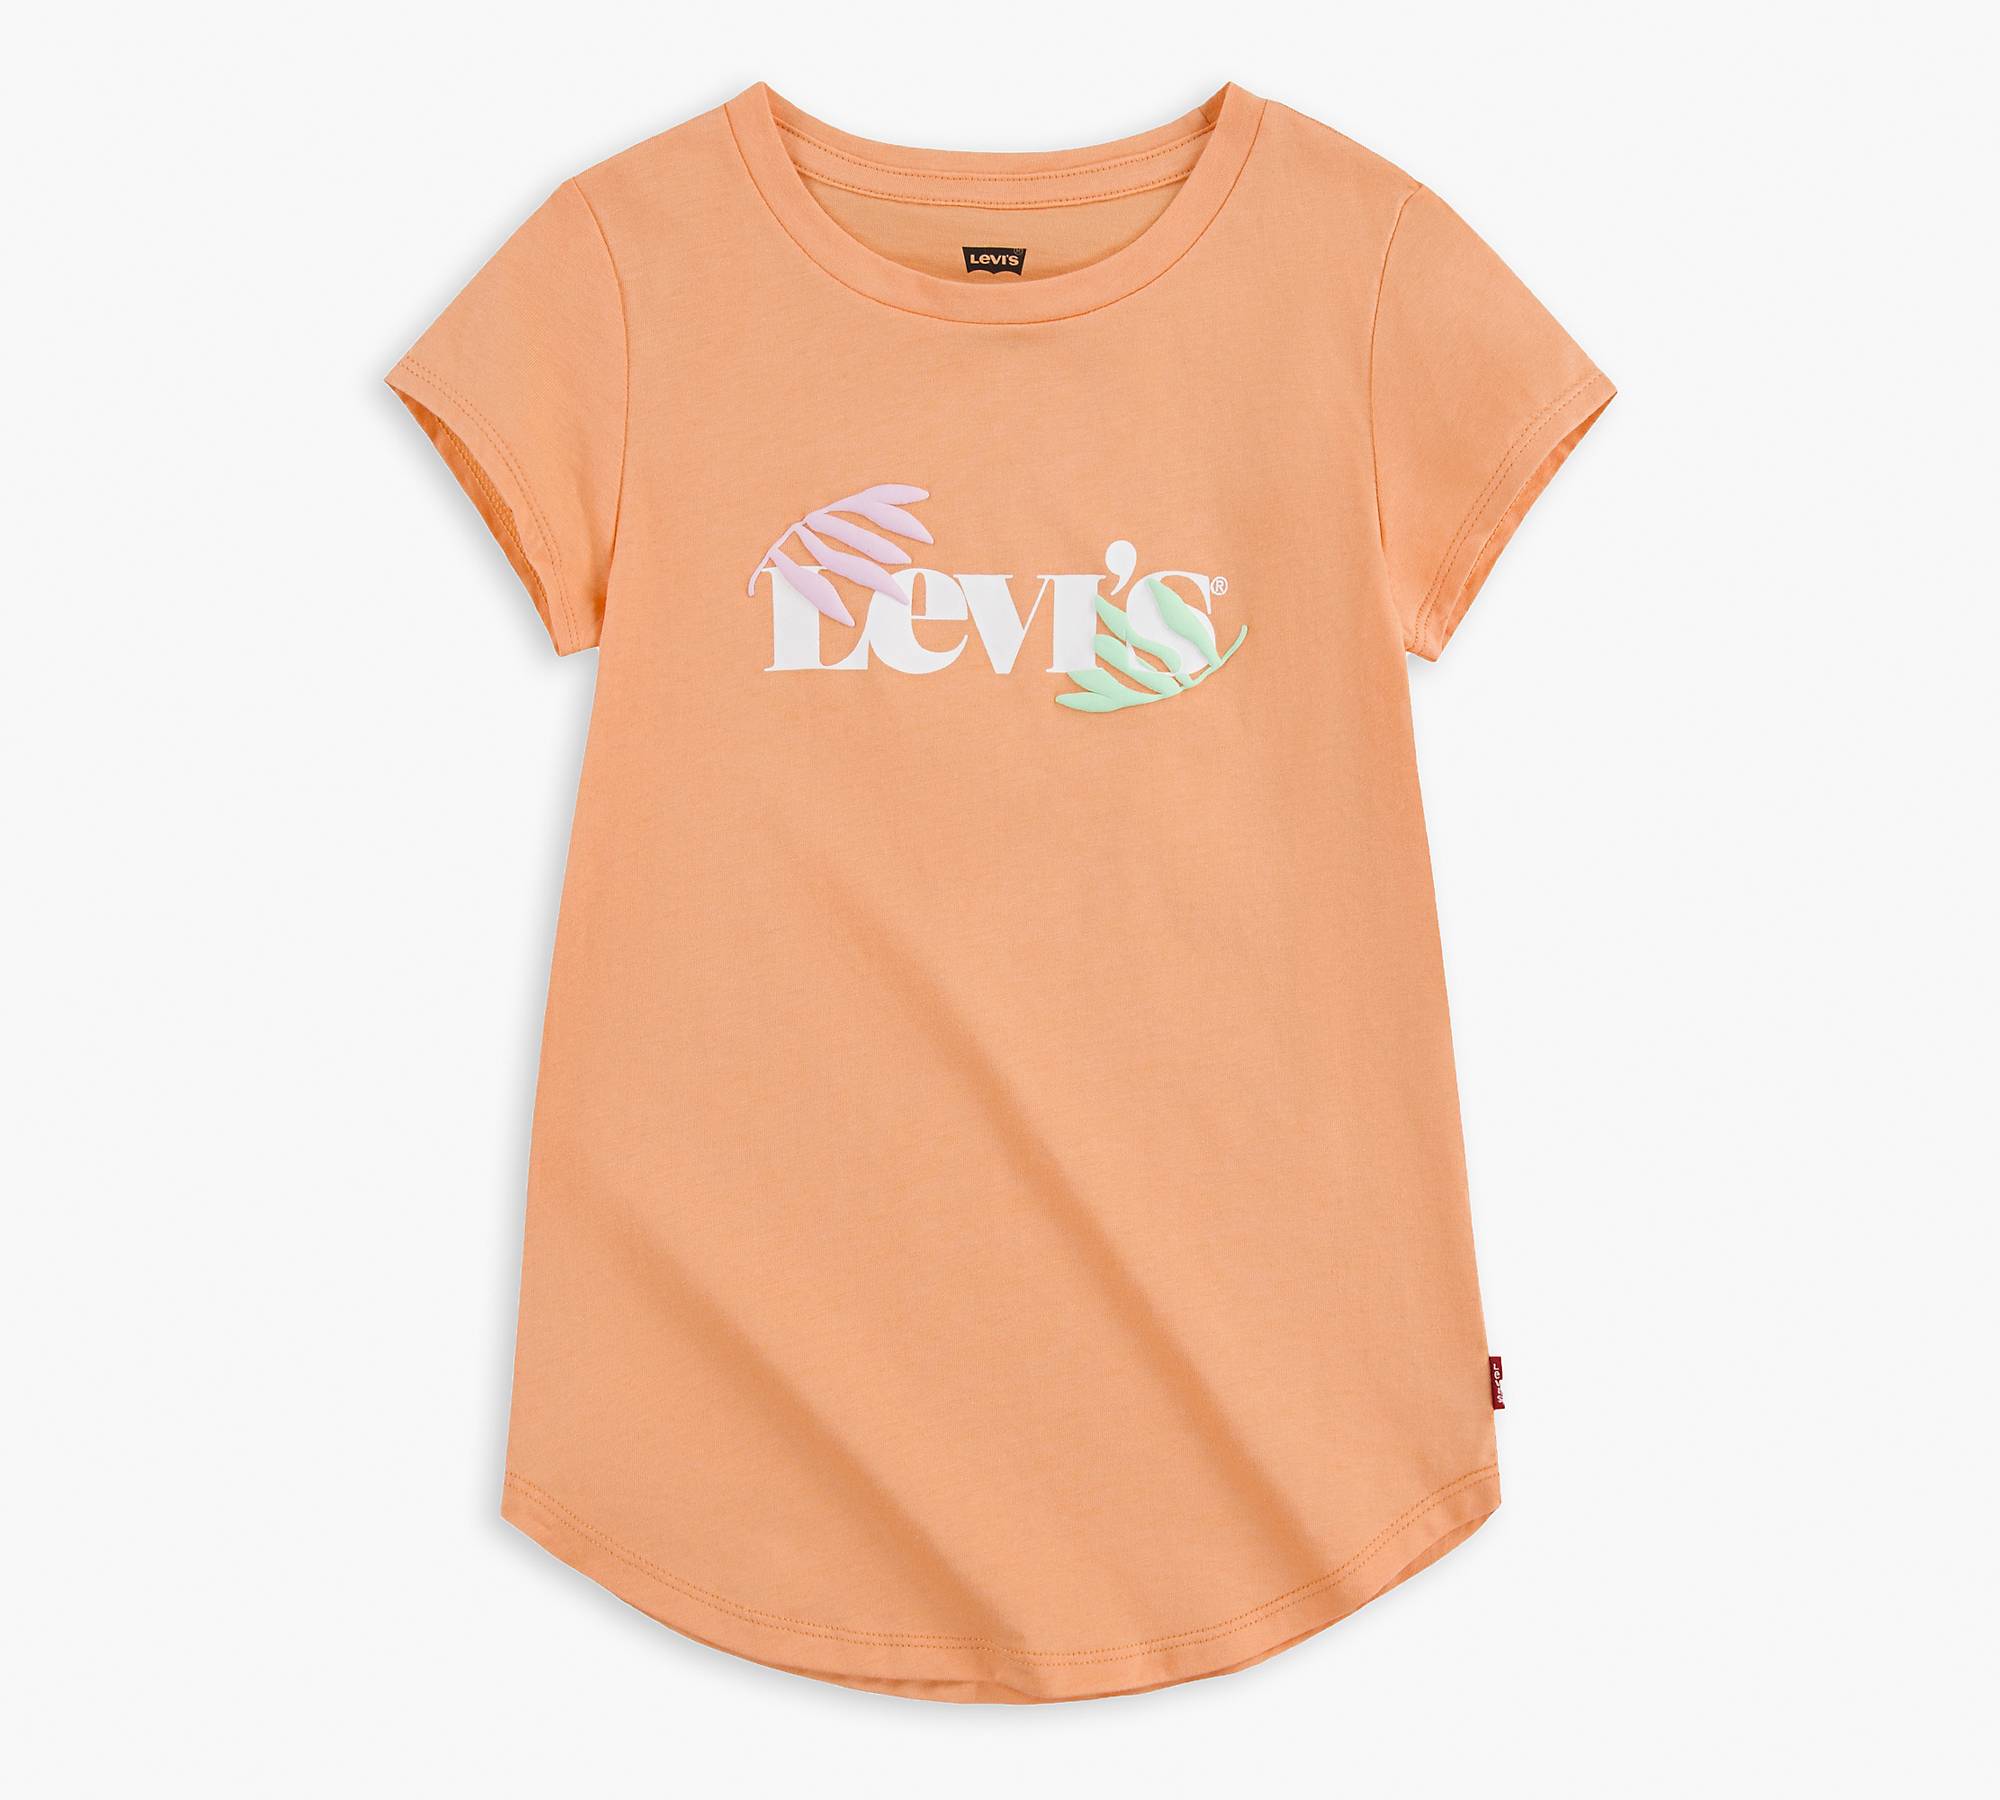 Toddler Girls 2T-4T Graphic Tee Shirt 1